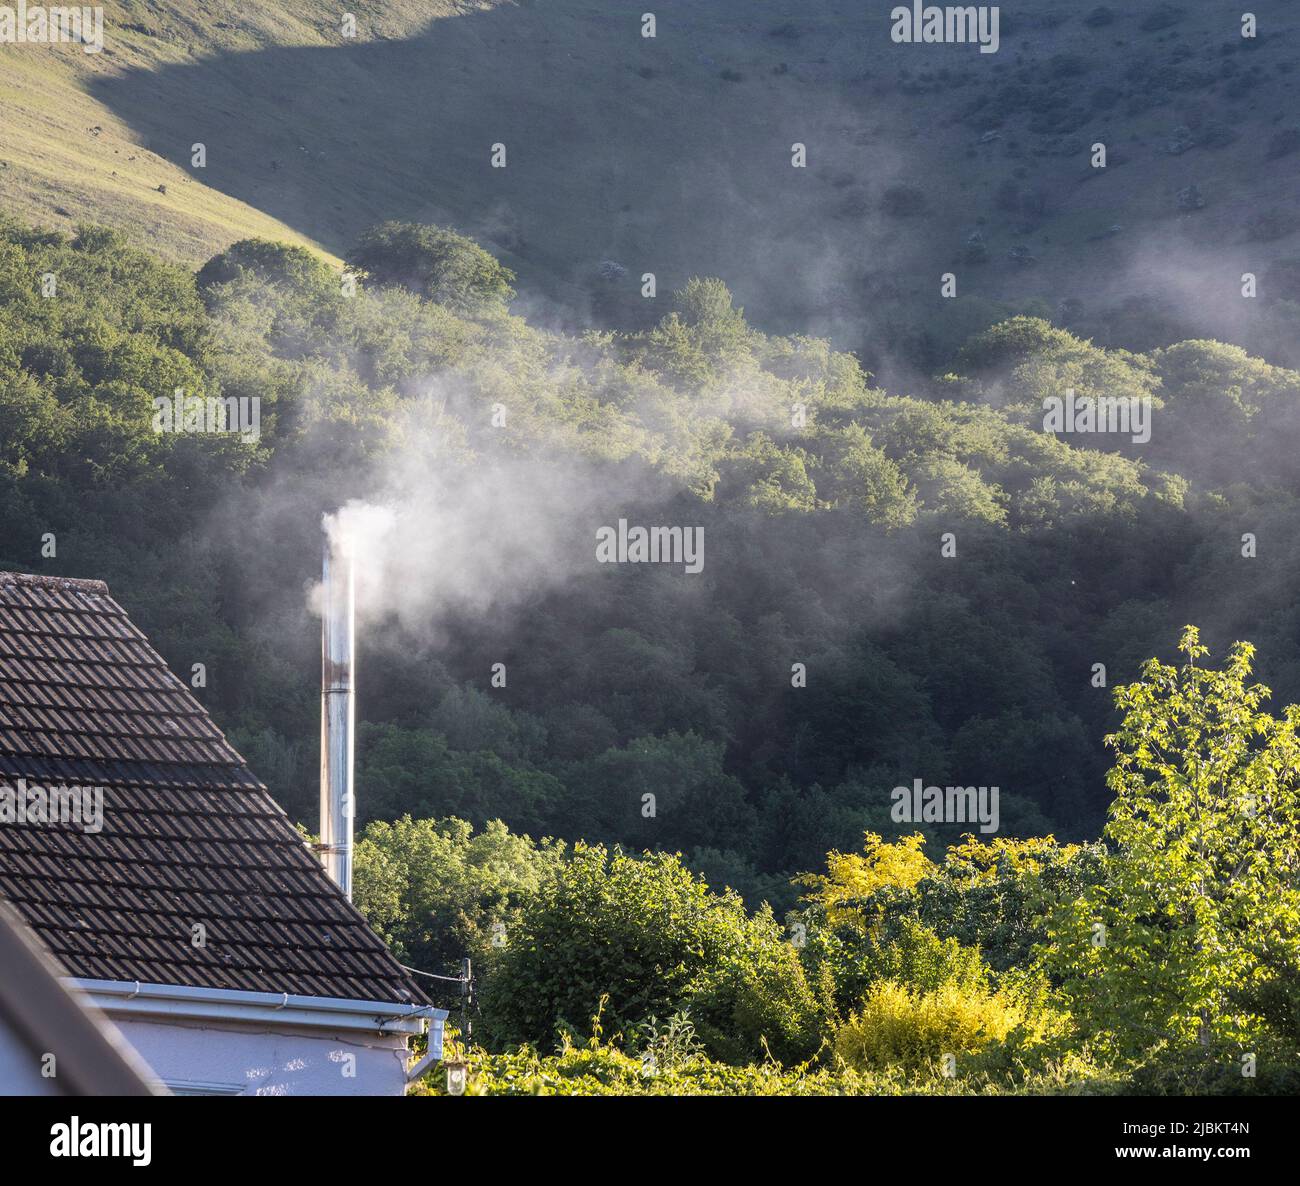 Smoking woodburner chimney on house in village, Wales, UK Stock Photo